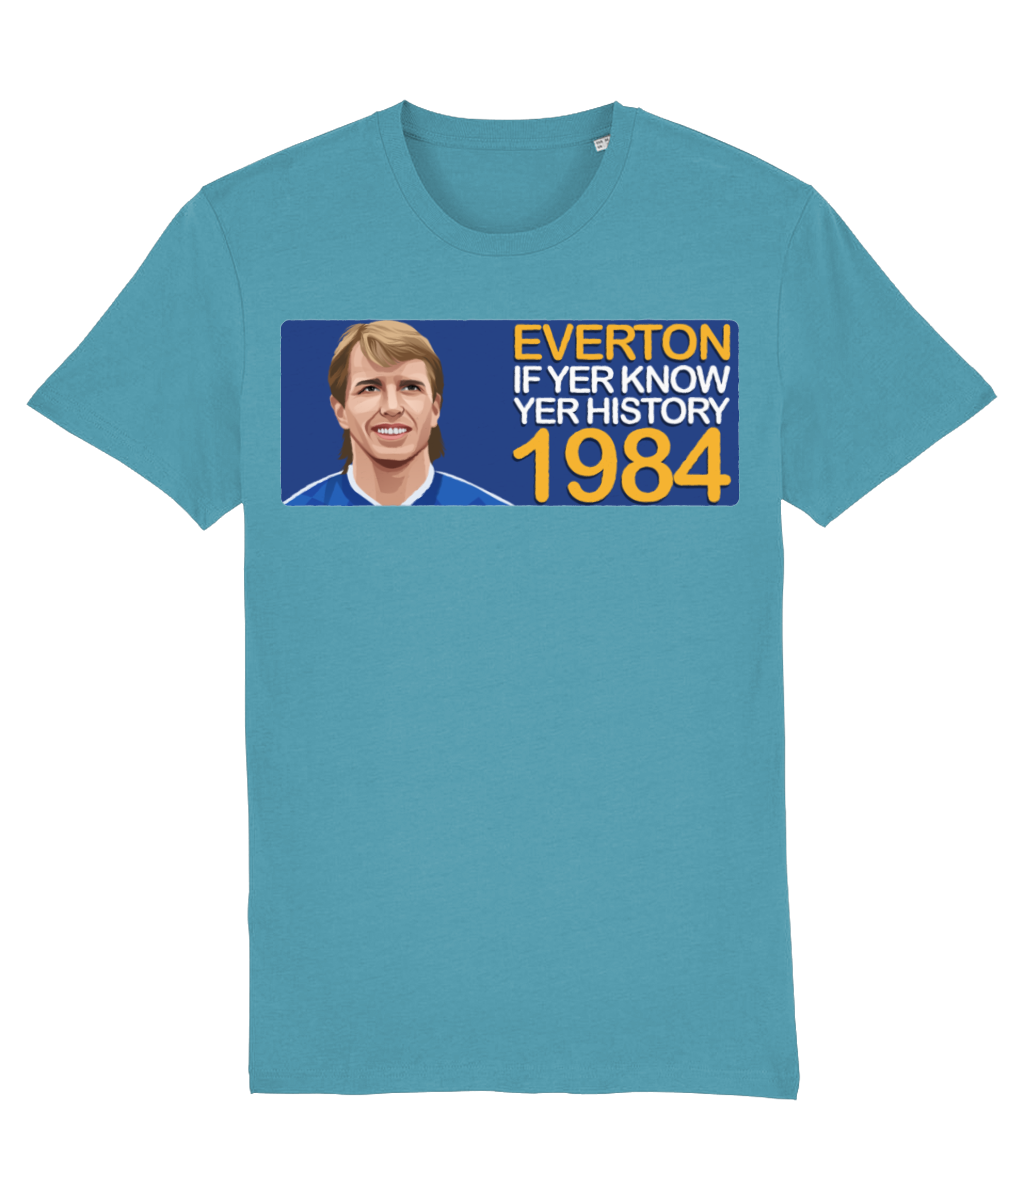 Everton 1984 Trevor Steven If Yer Know Yer History Unisex T-Shirt Stanley/Stella Retrotext Atlantic Blue XX-Small 